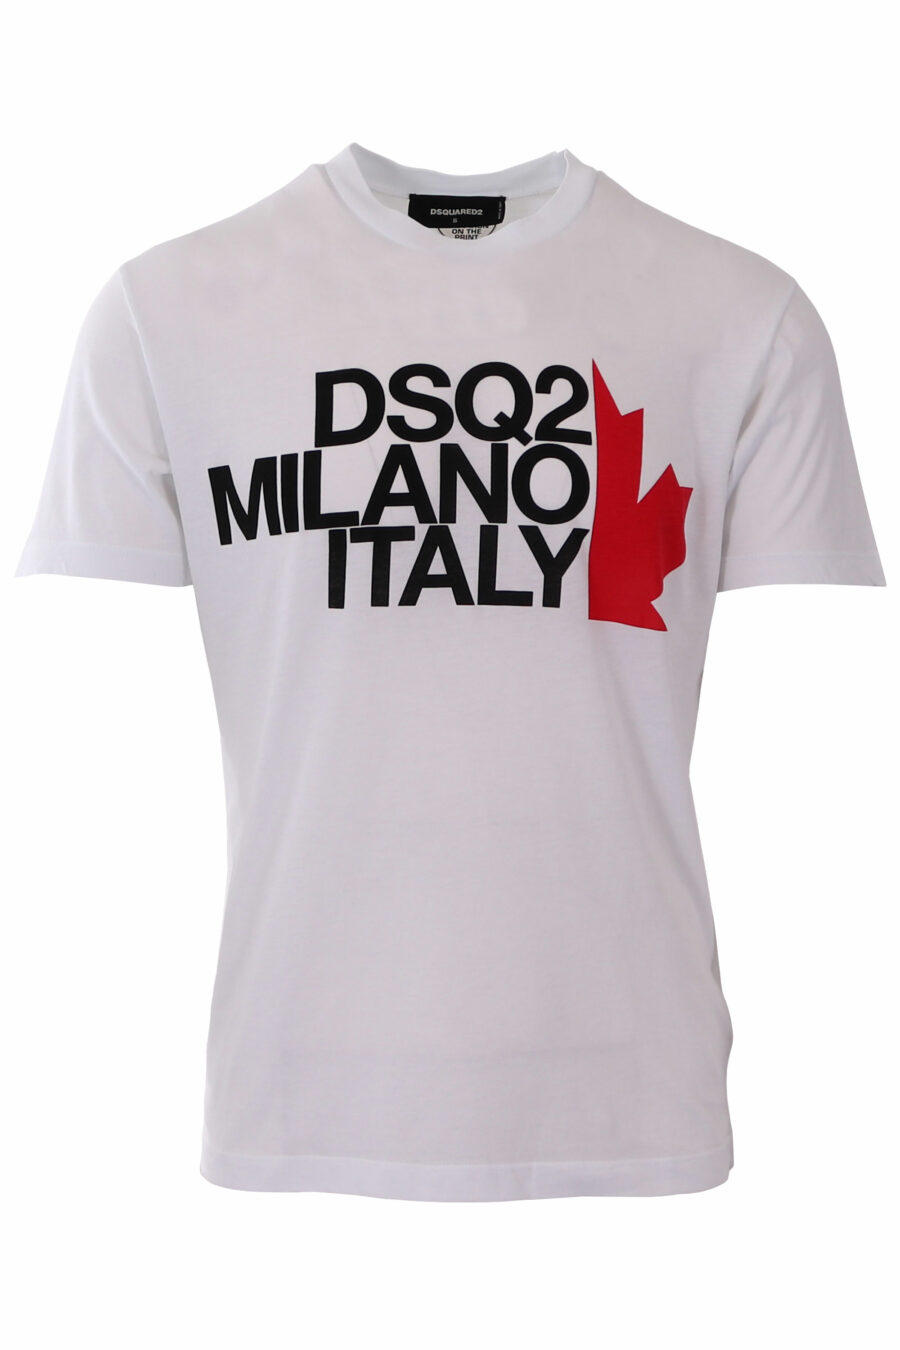 T-shirt blanc avec maxilogo "milano italy" - IMG 1842